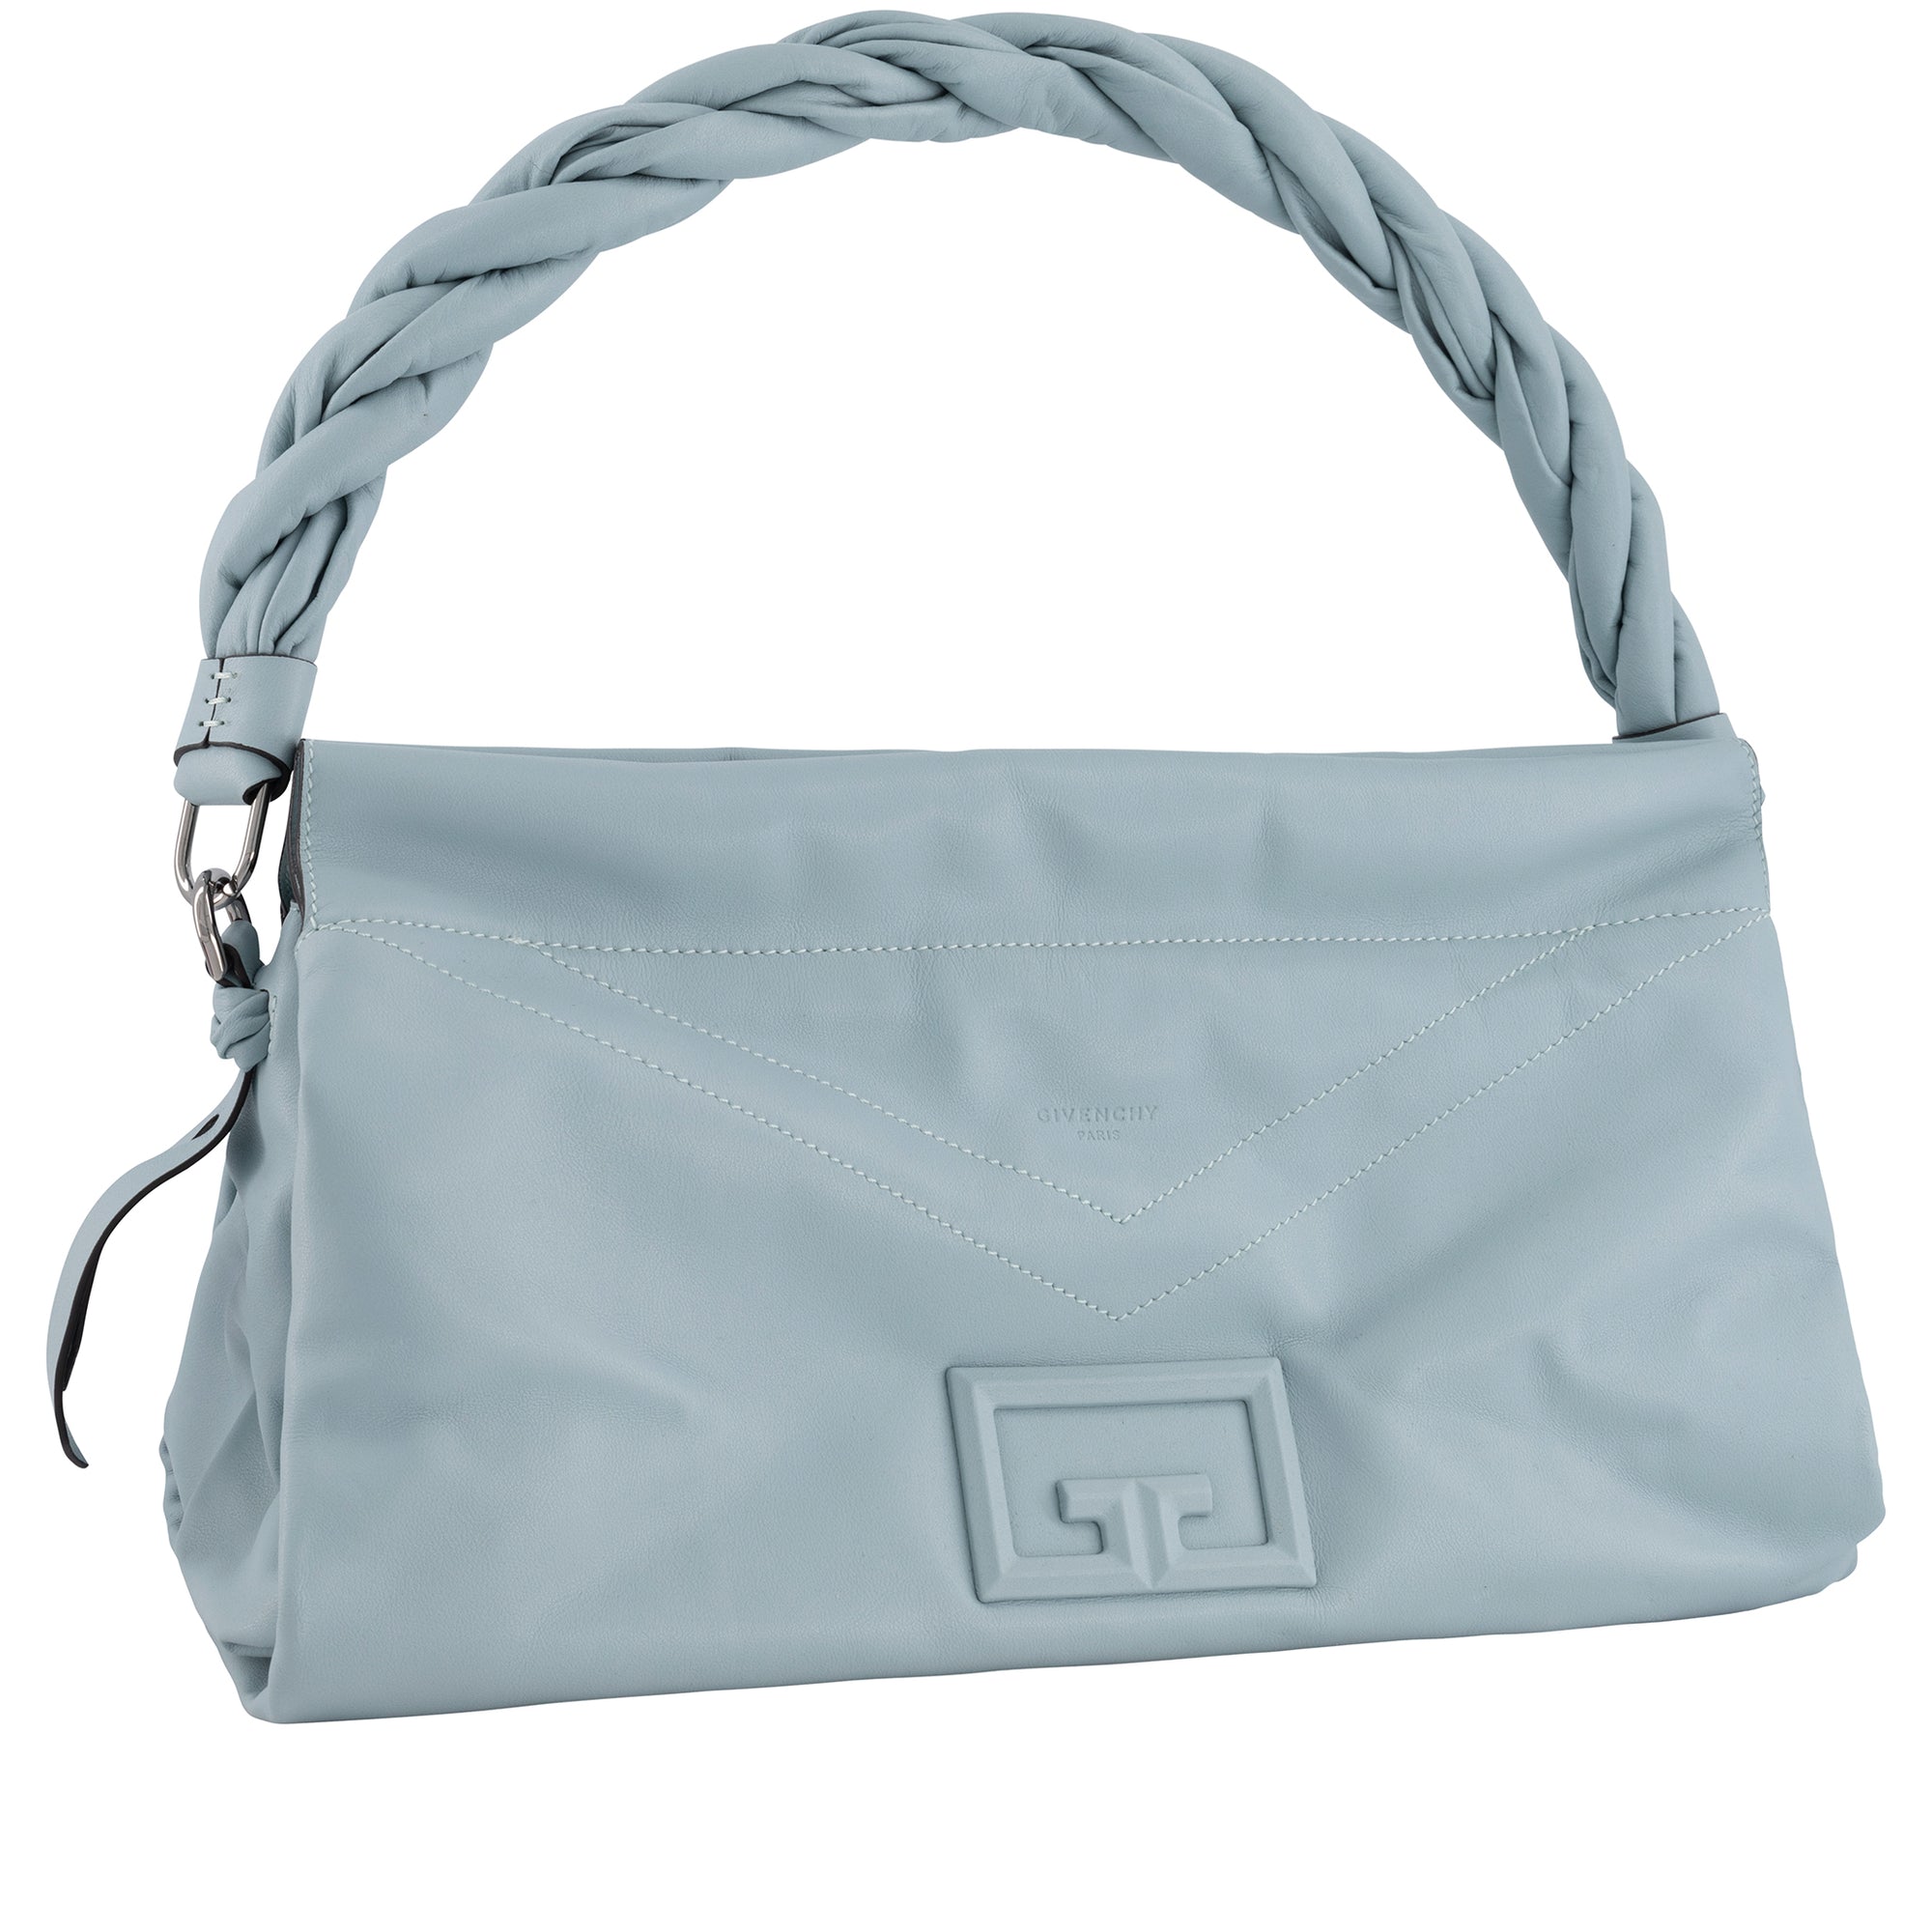 Givenchy Blue Leather Handbag